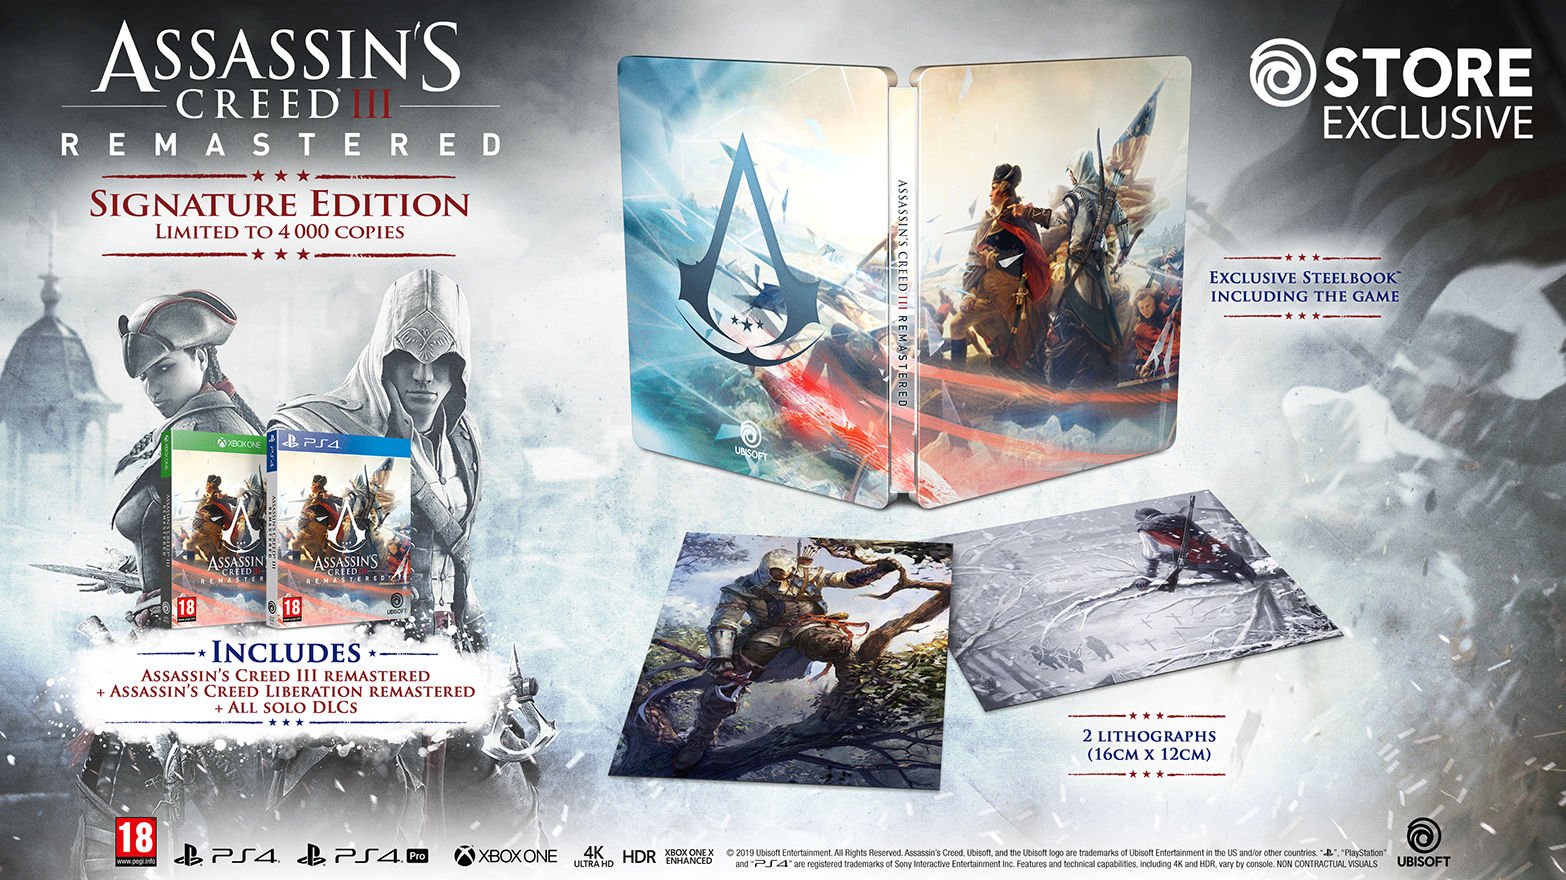 Assassin's Creed III Remastered - Signature Edition (Xbox One), Ubisoft